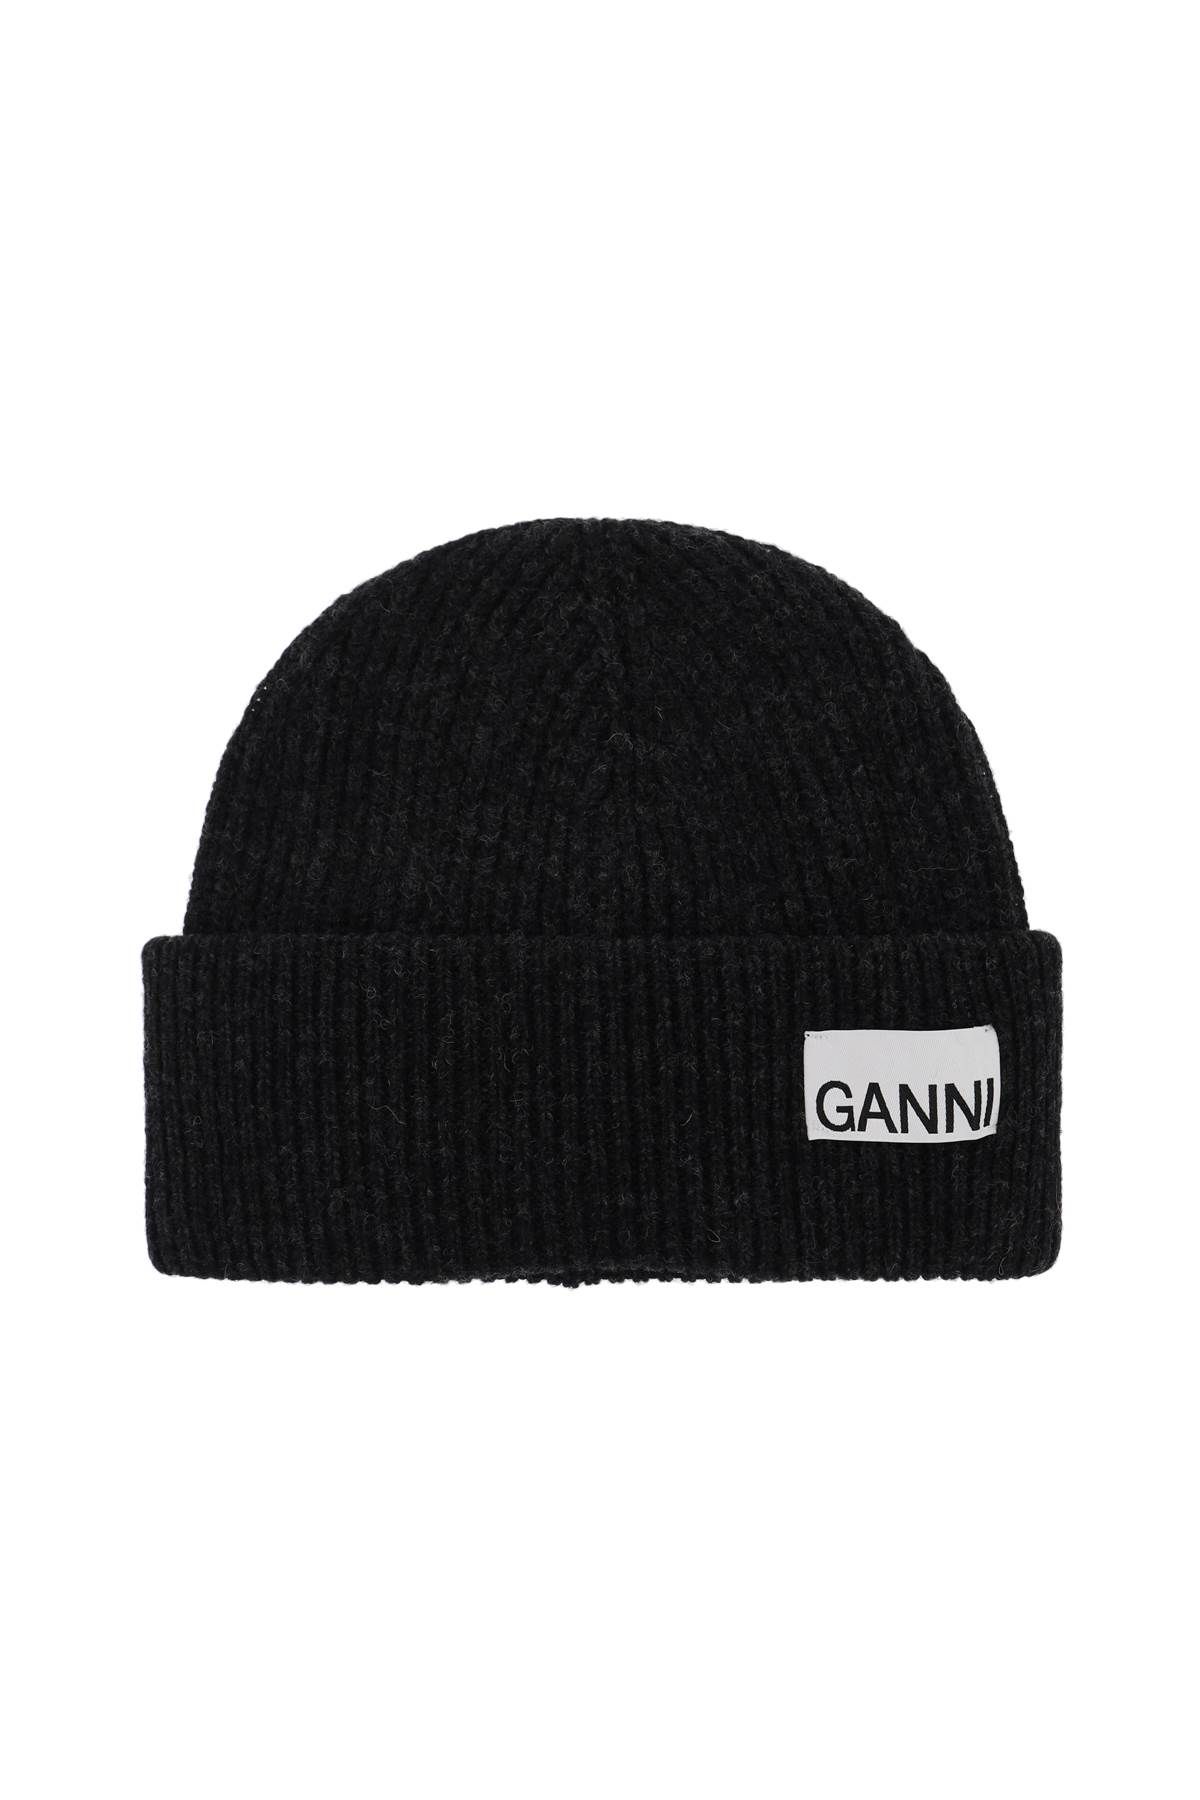 Ganni GANNI beanie hat with logo label